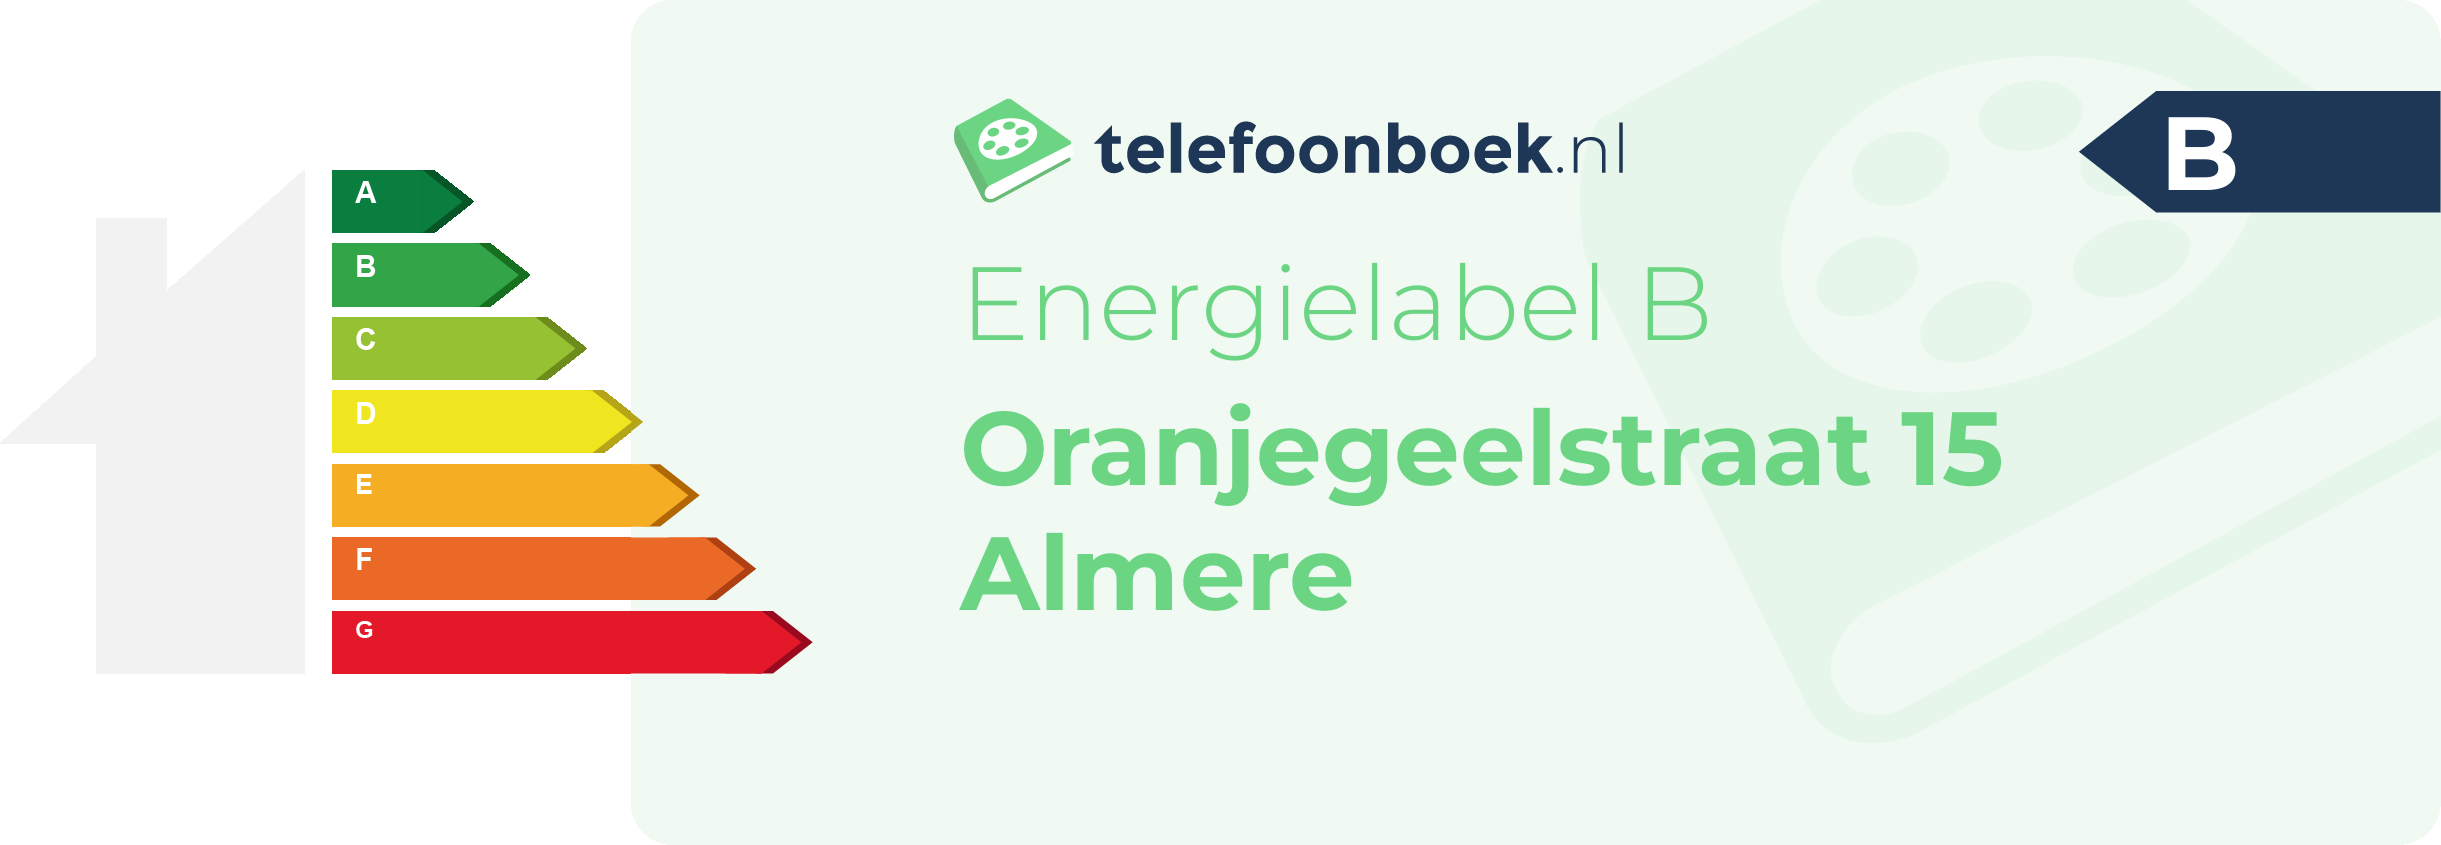 Energielabel Oranjegeelstraat 15 Almere